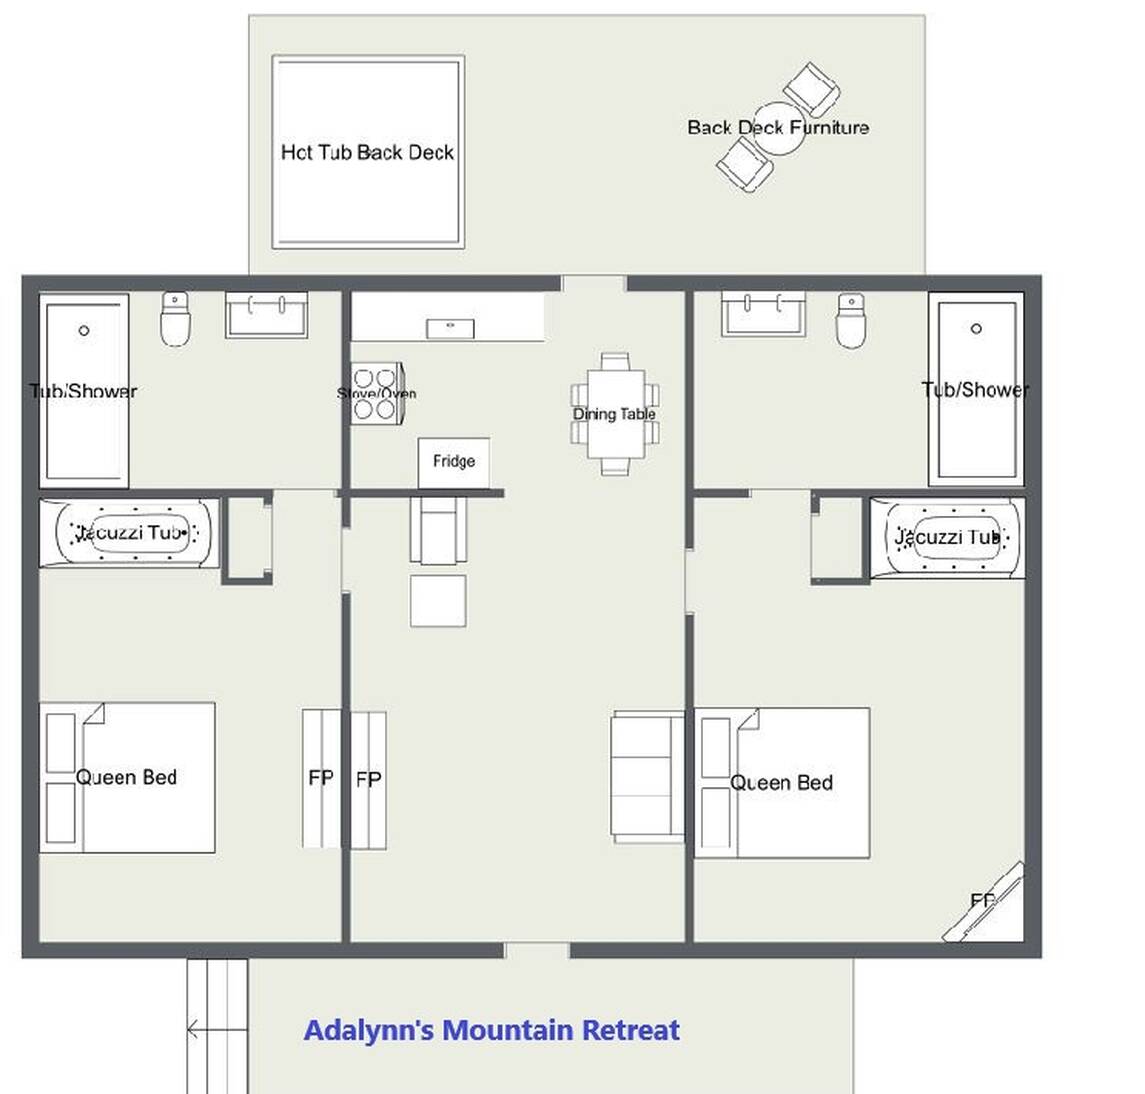 Adalynn's Mountain Retreat  floorplan